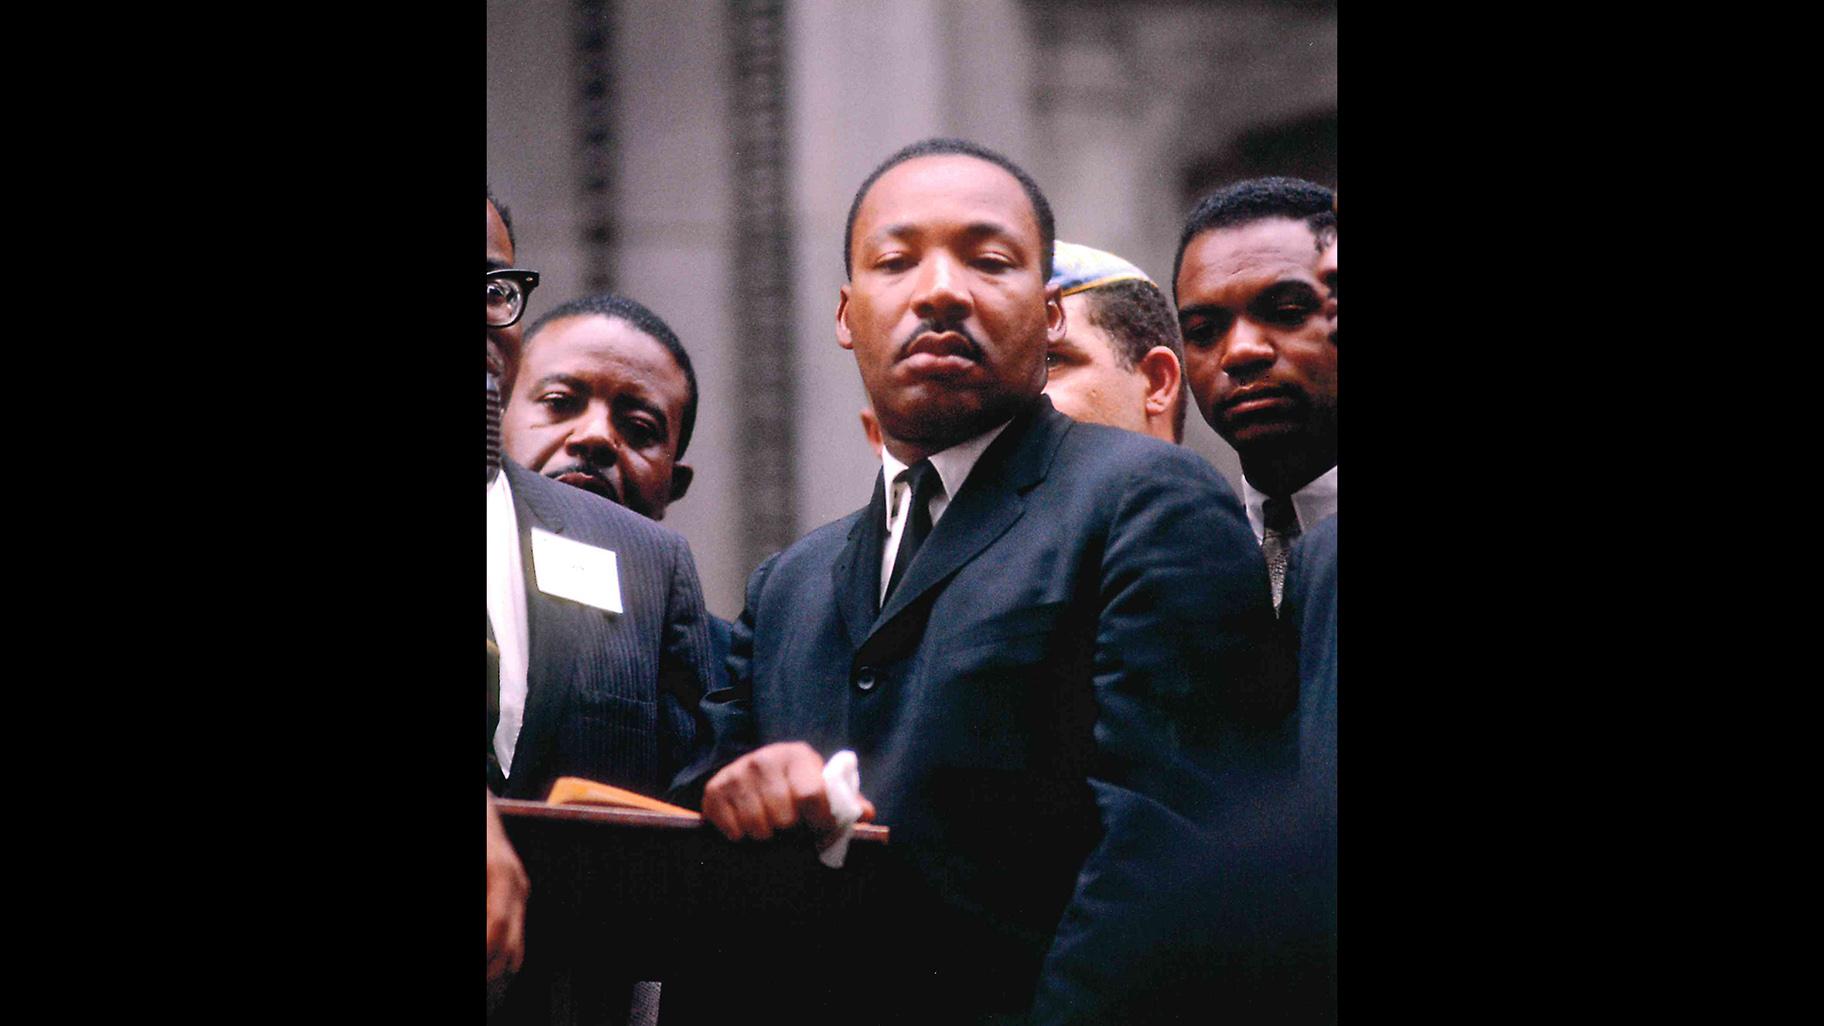 Martin Luther King Jr. photograph by Bernard Kleina. (Courtesy of the Elmhurst Art Museum)